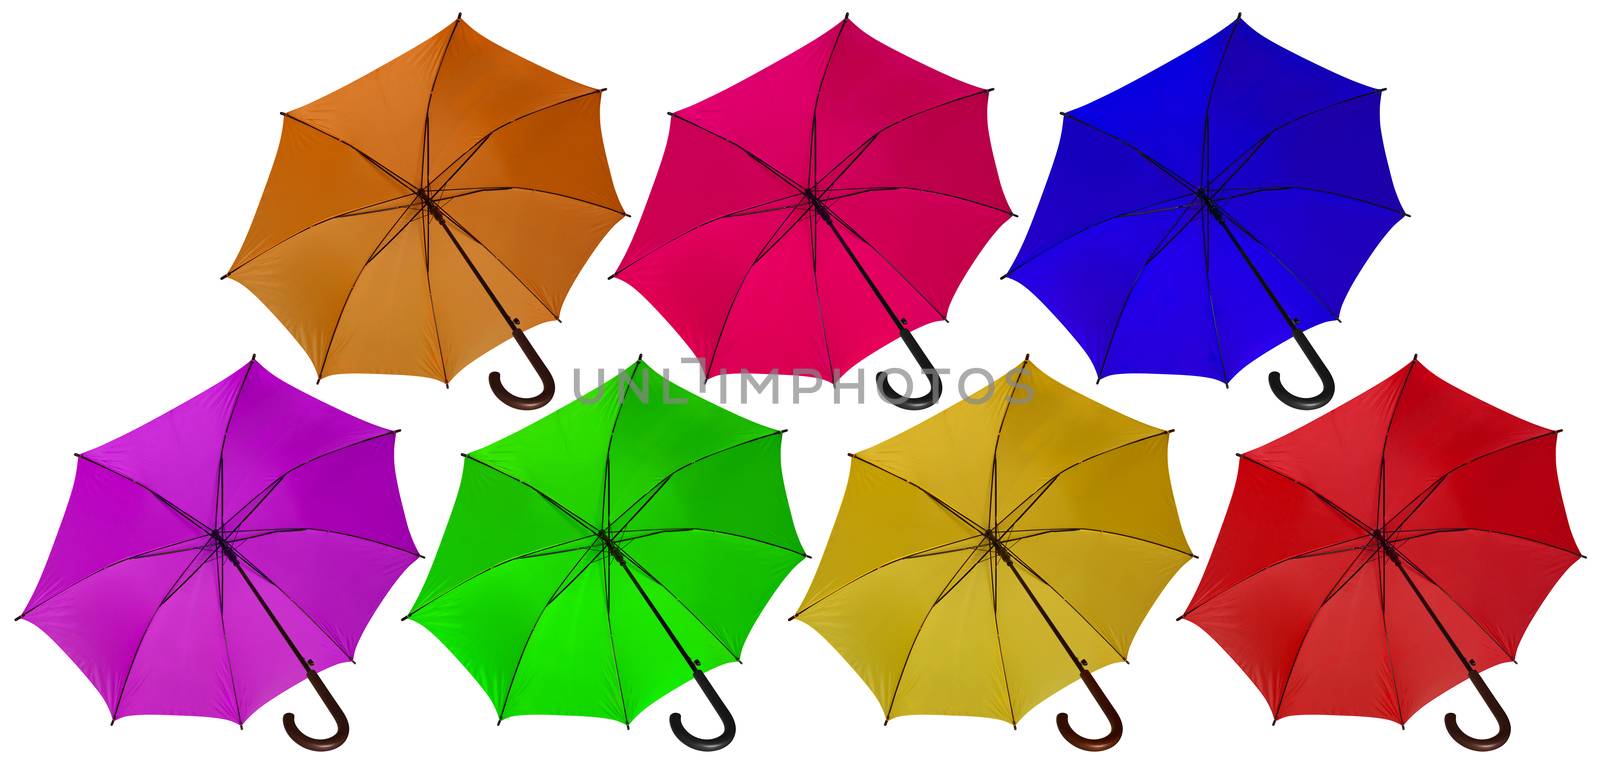 Umbrellas open - Colorful by Venakr